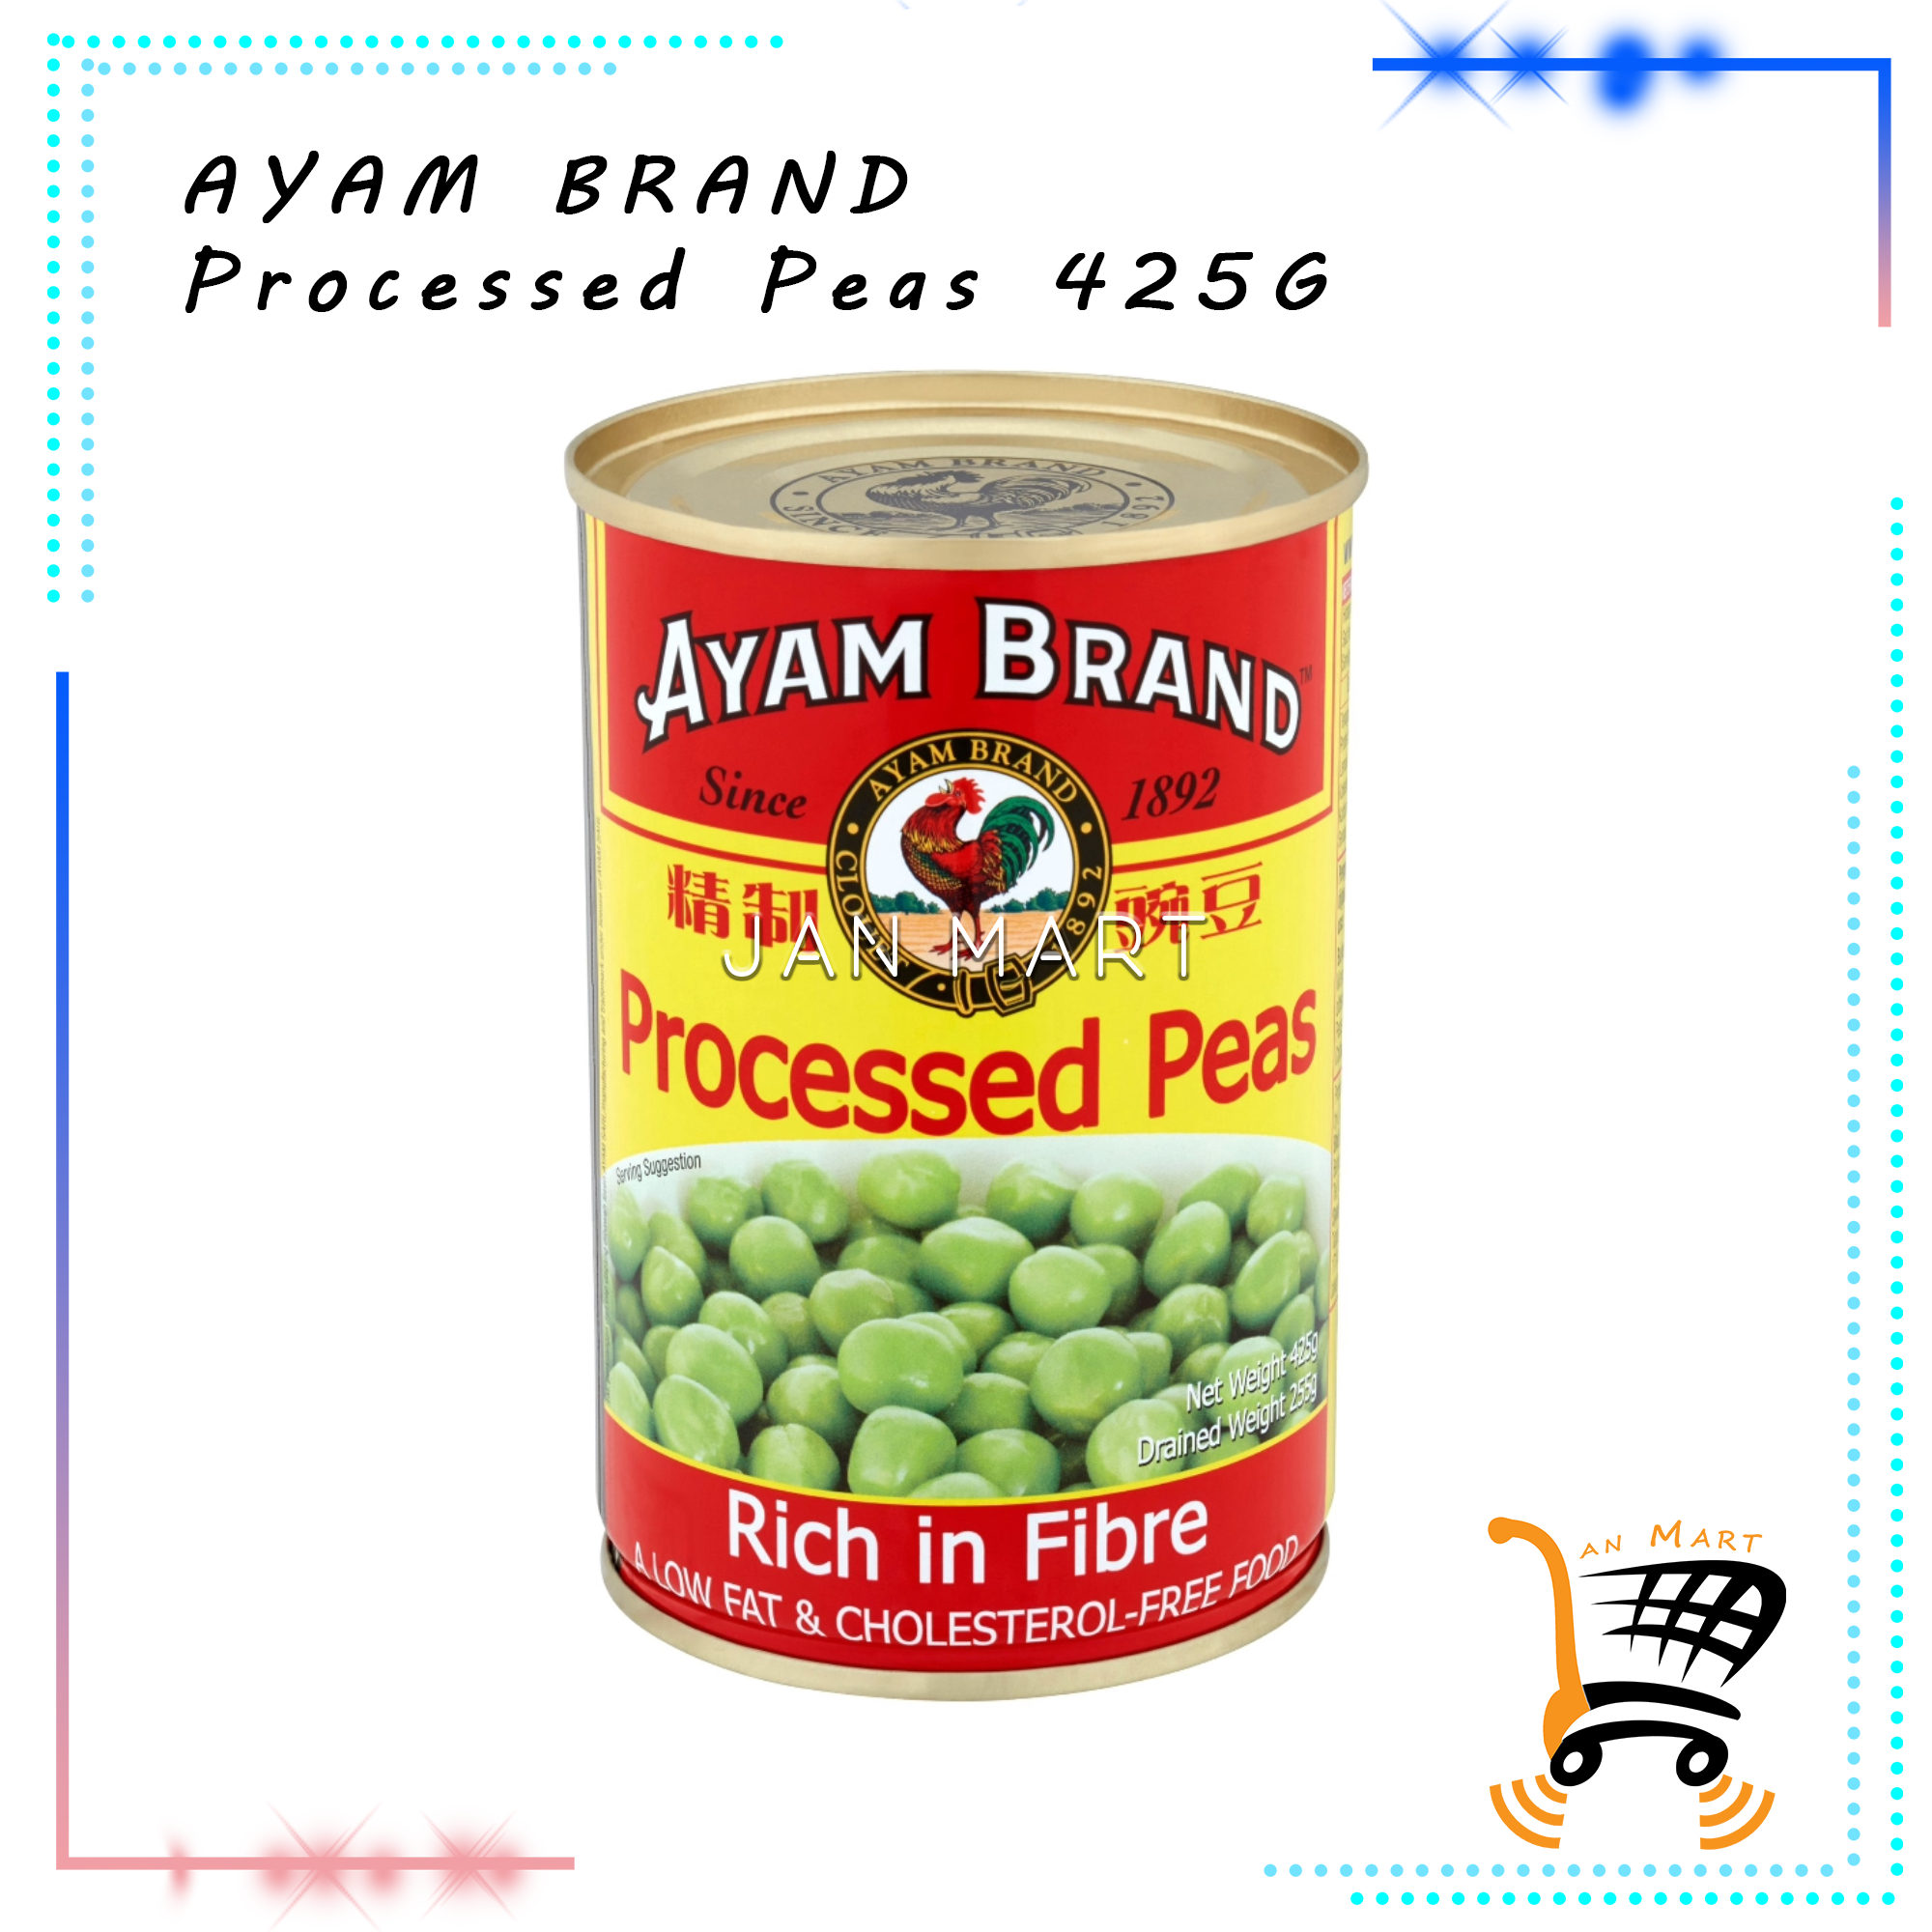 AYAM BRAND Processed Peas 425G